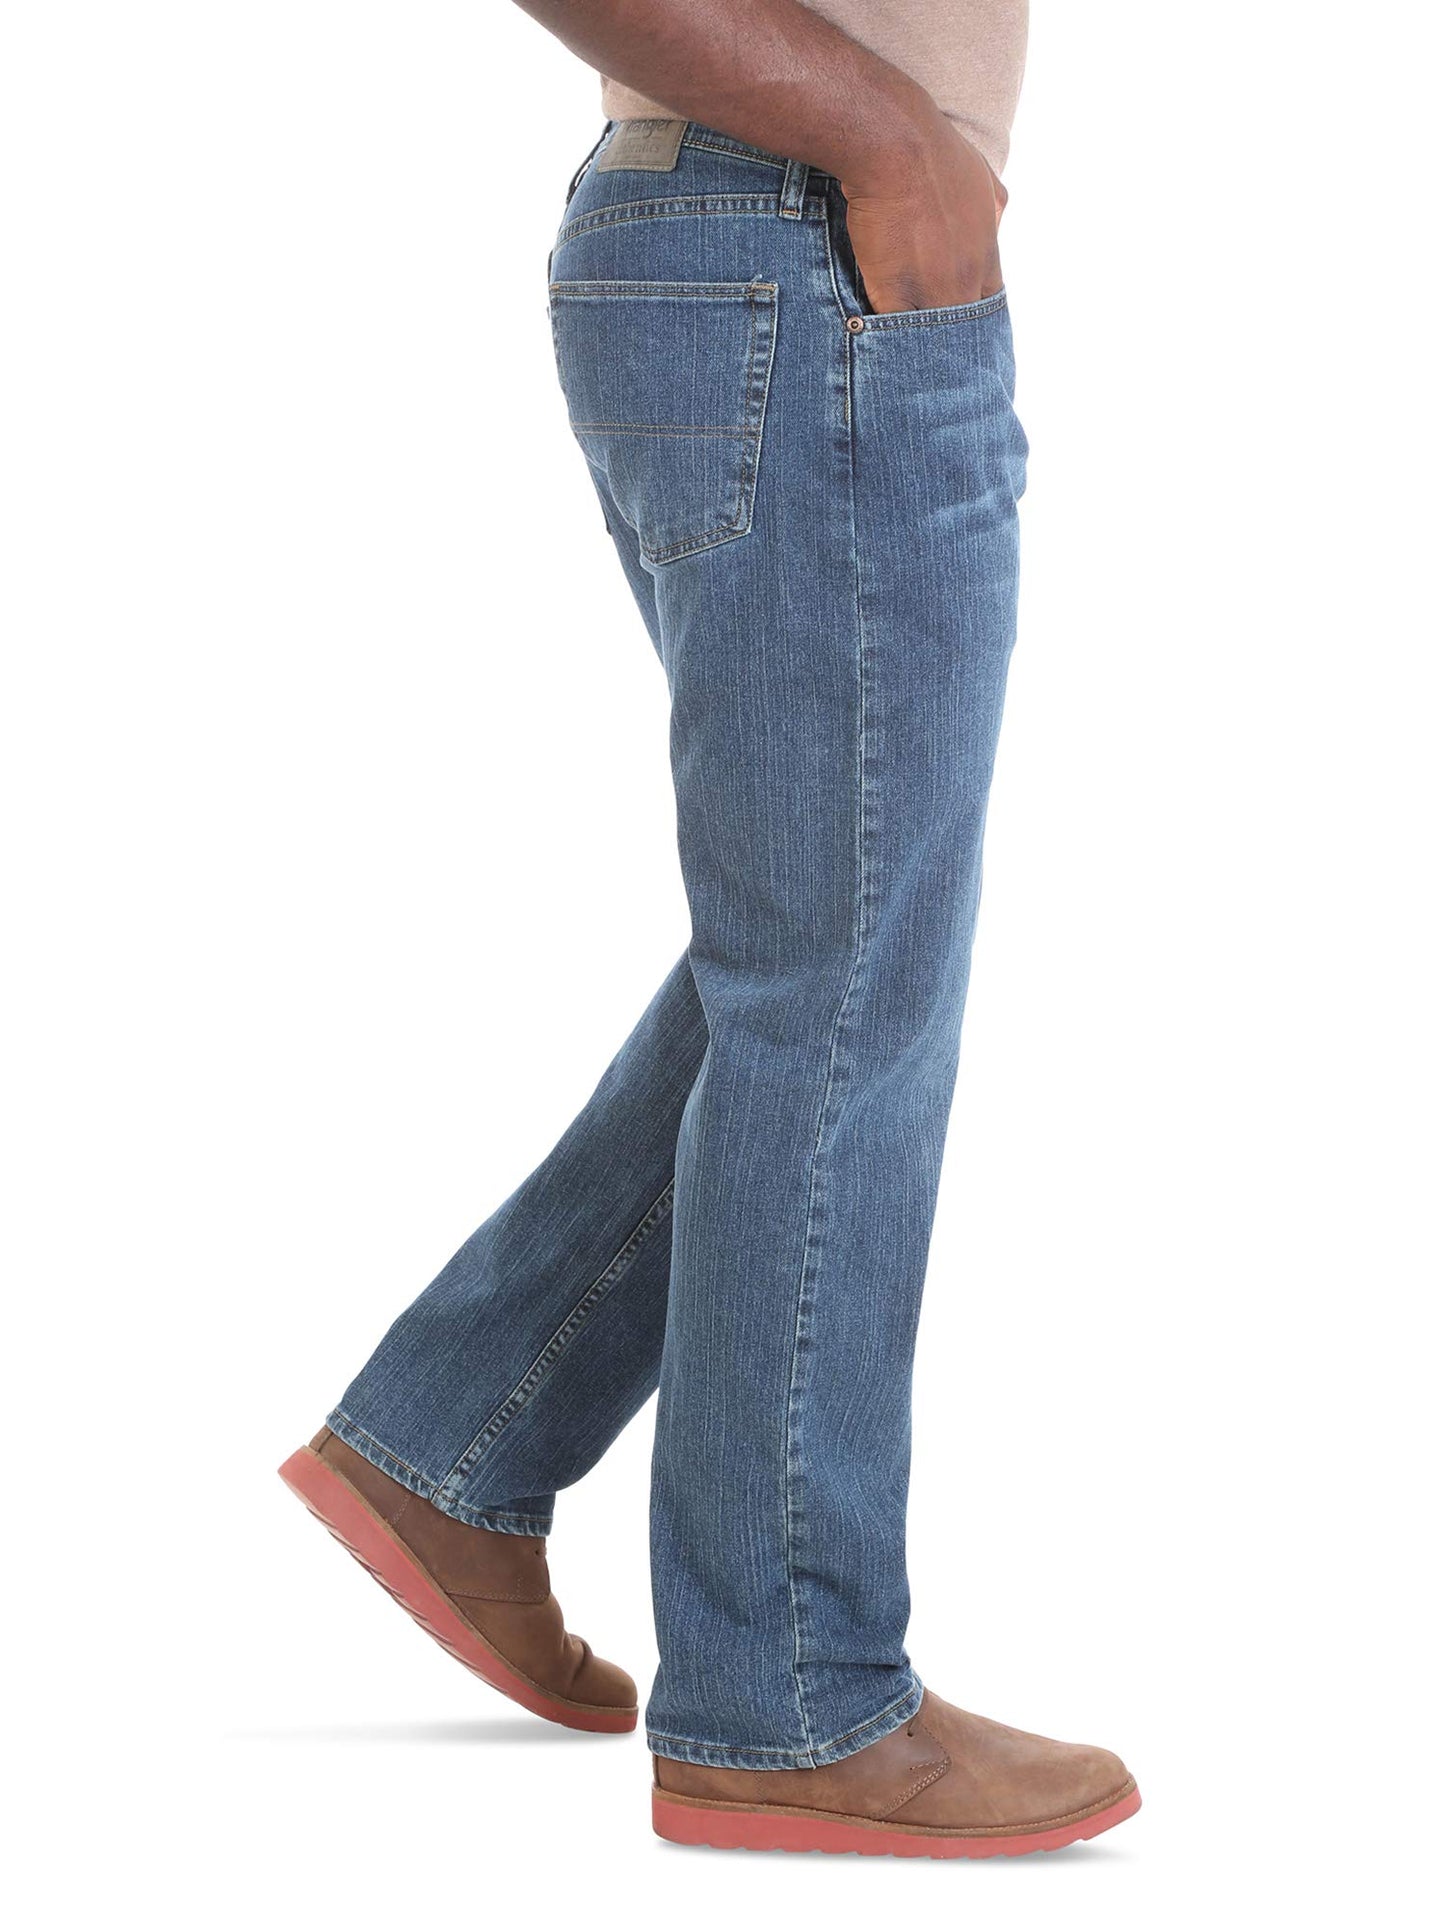 Wrangler Authentics Men's Regular Fit Comfort Flex Waist Jean, Blue Ocean, 29W x 30L